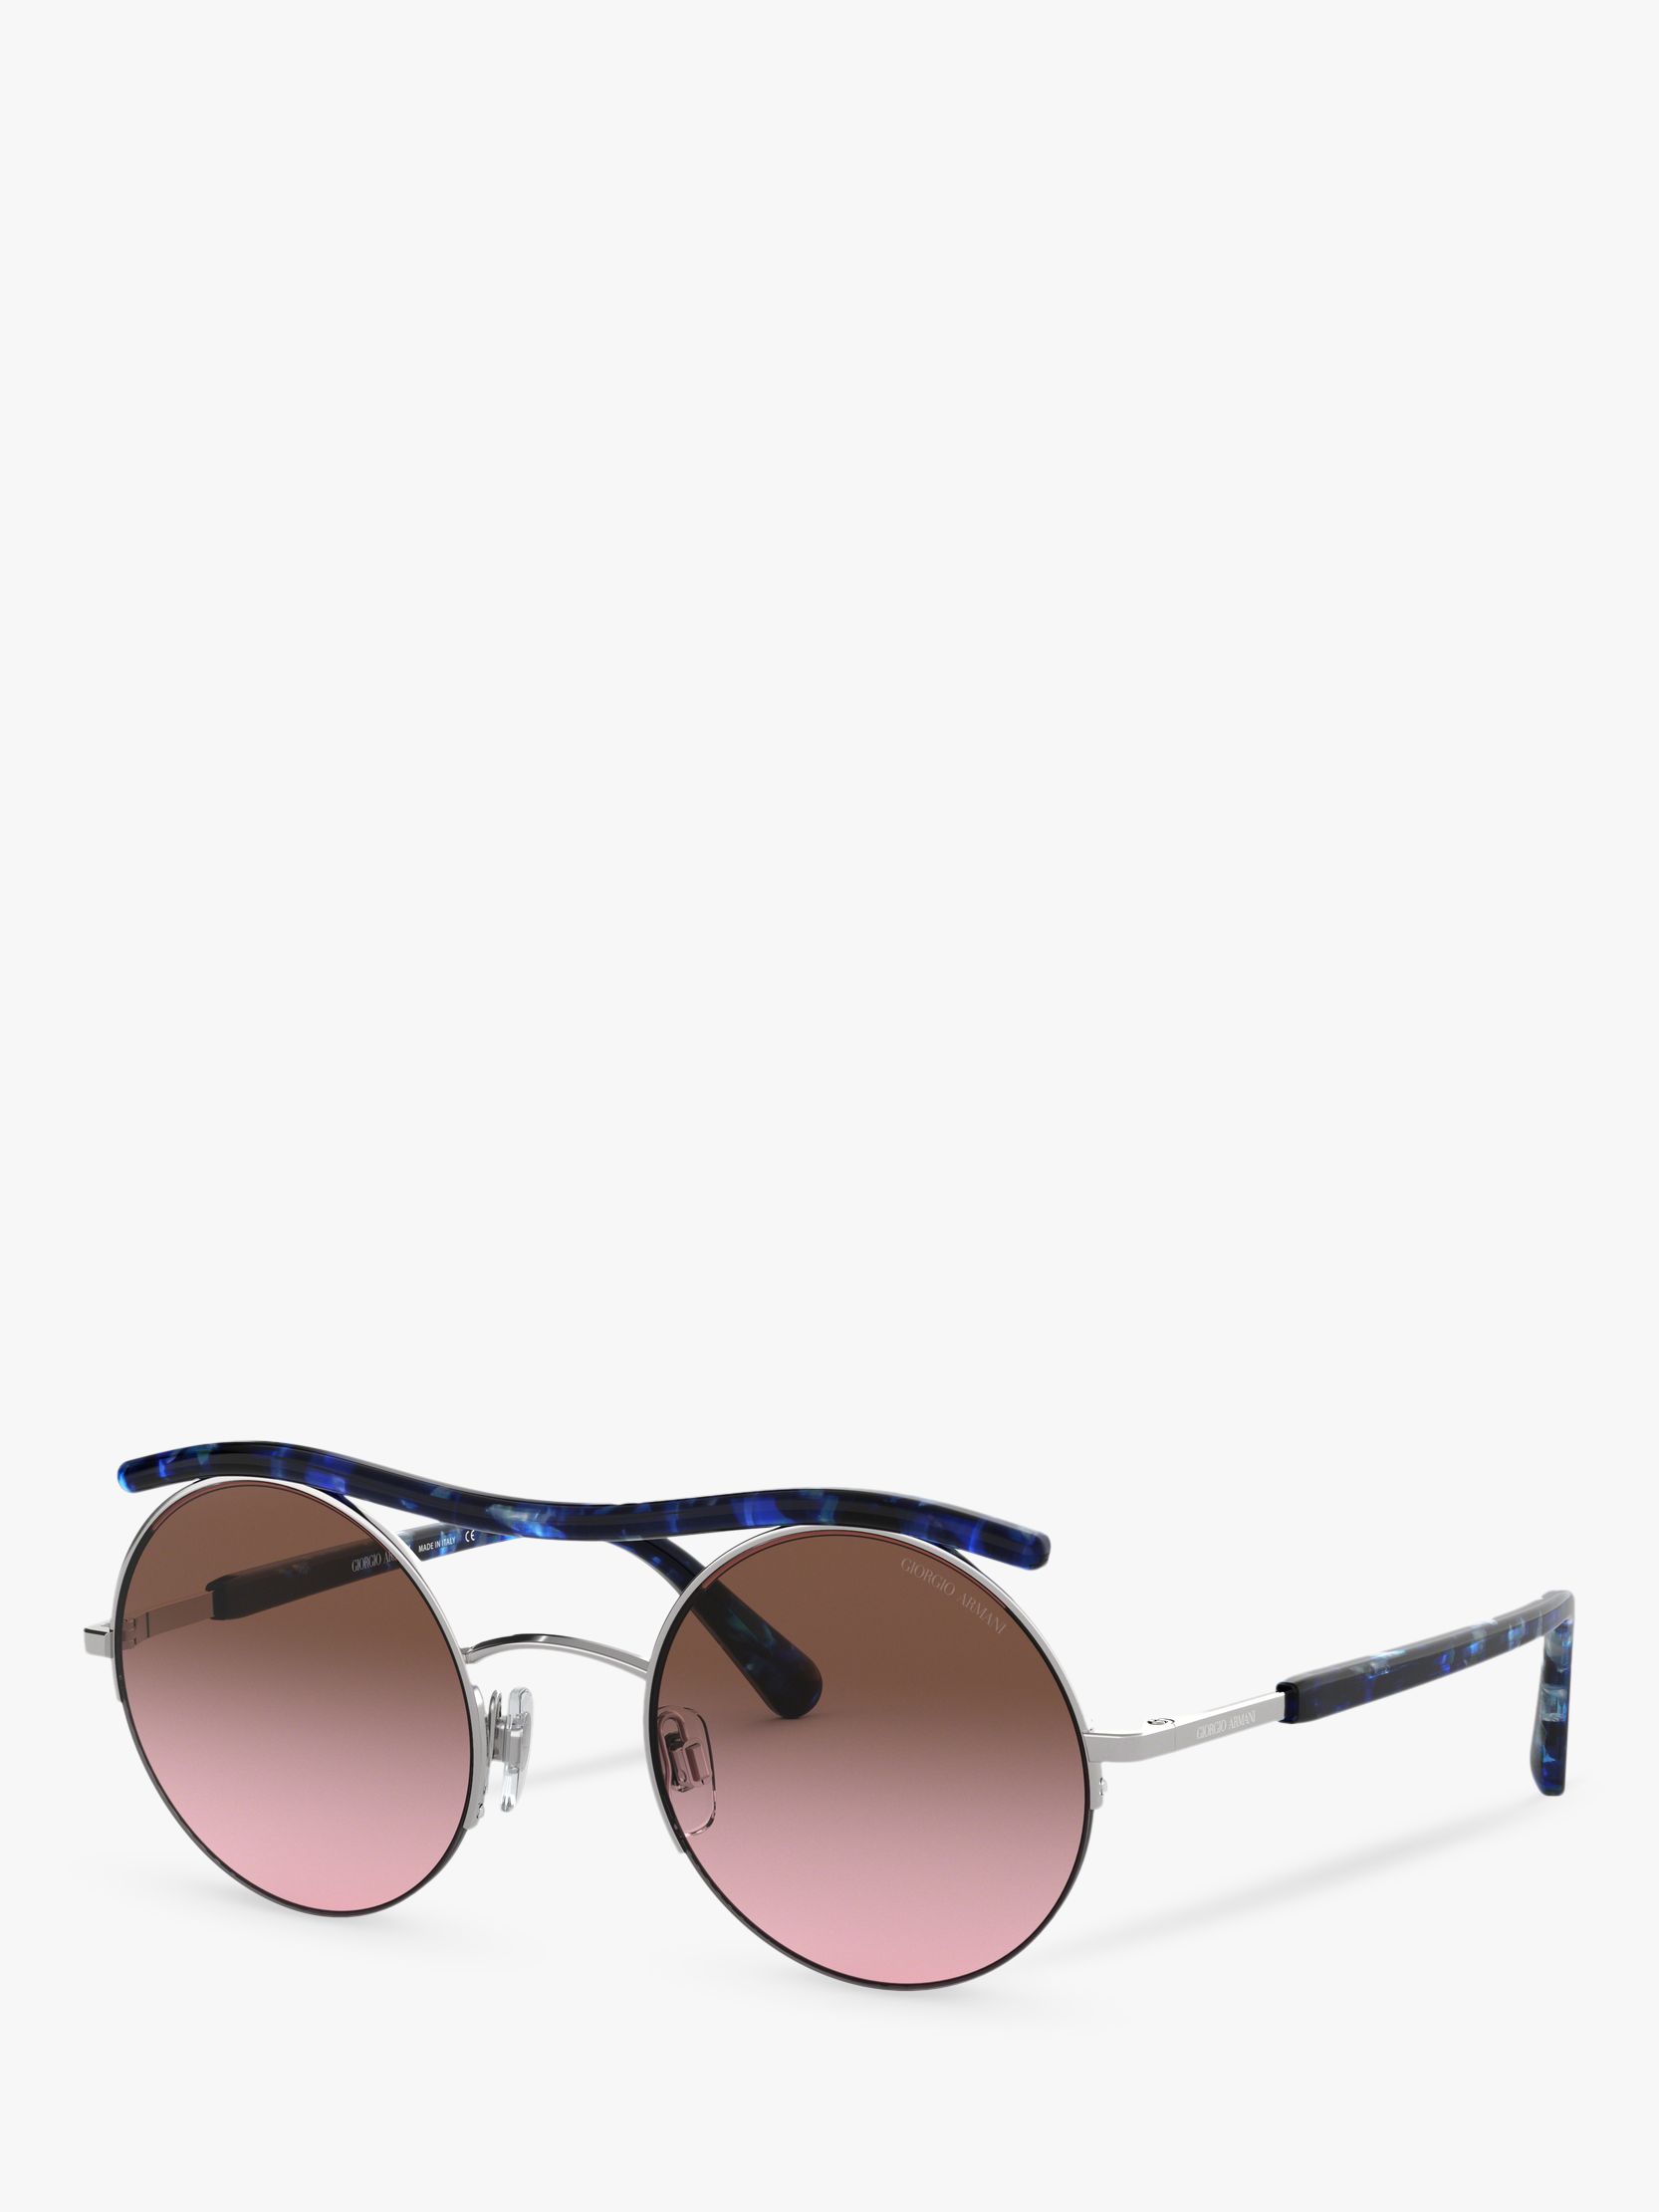 armani round sunglasses